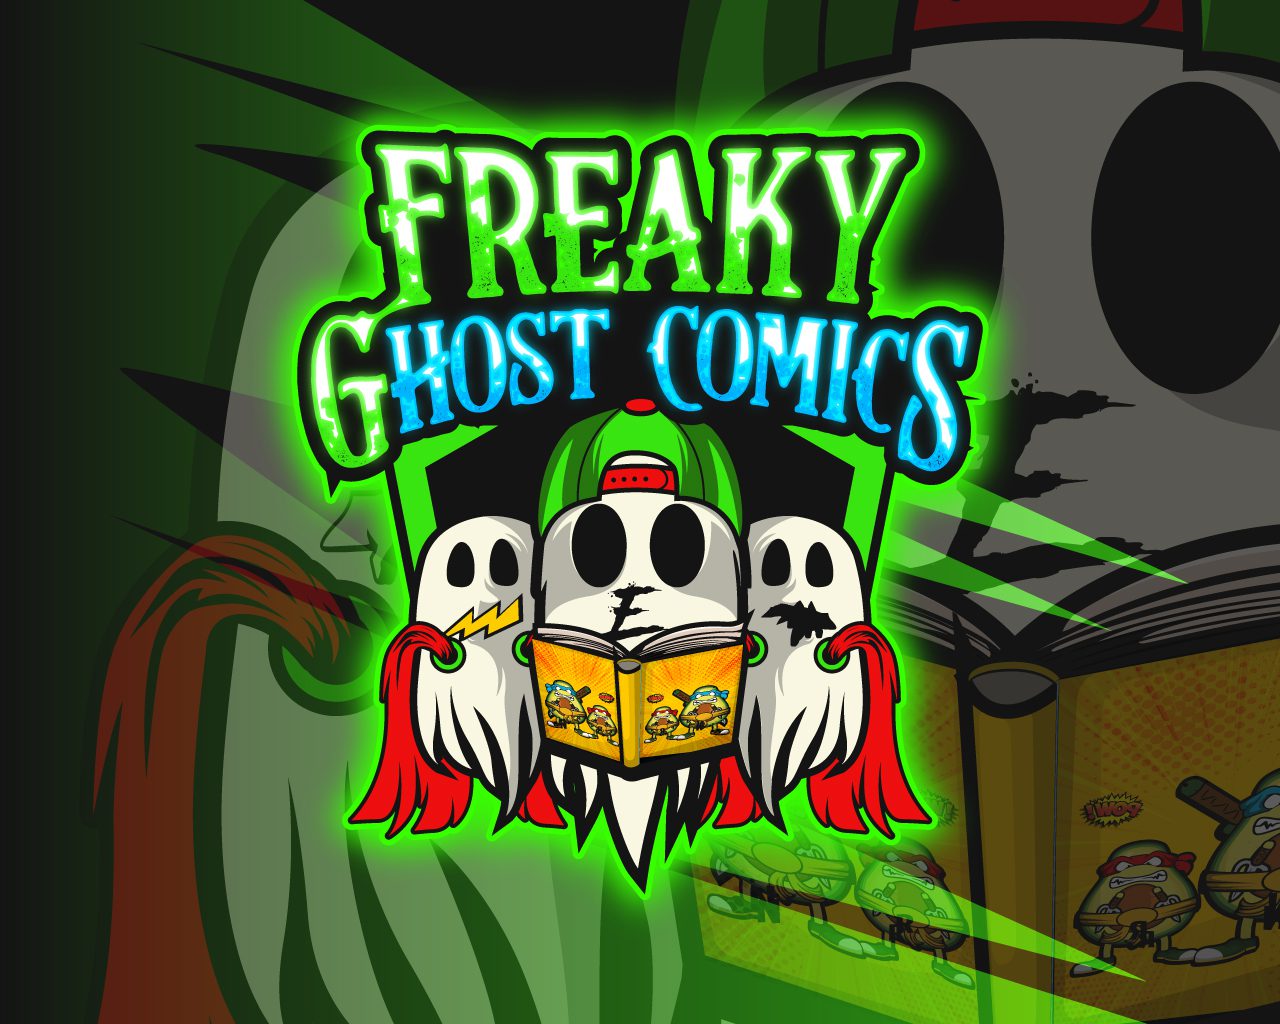 Freaky Ghost Comics